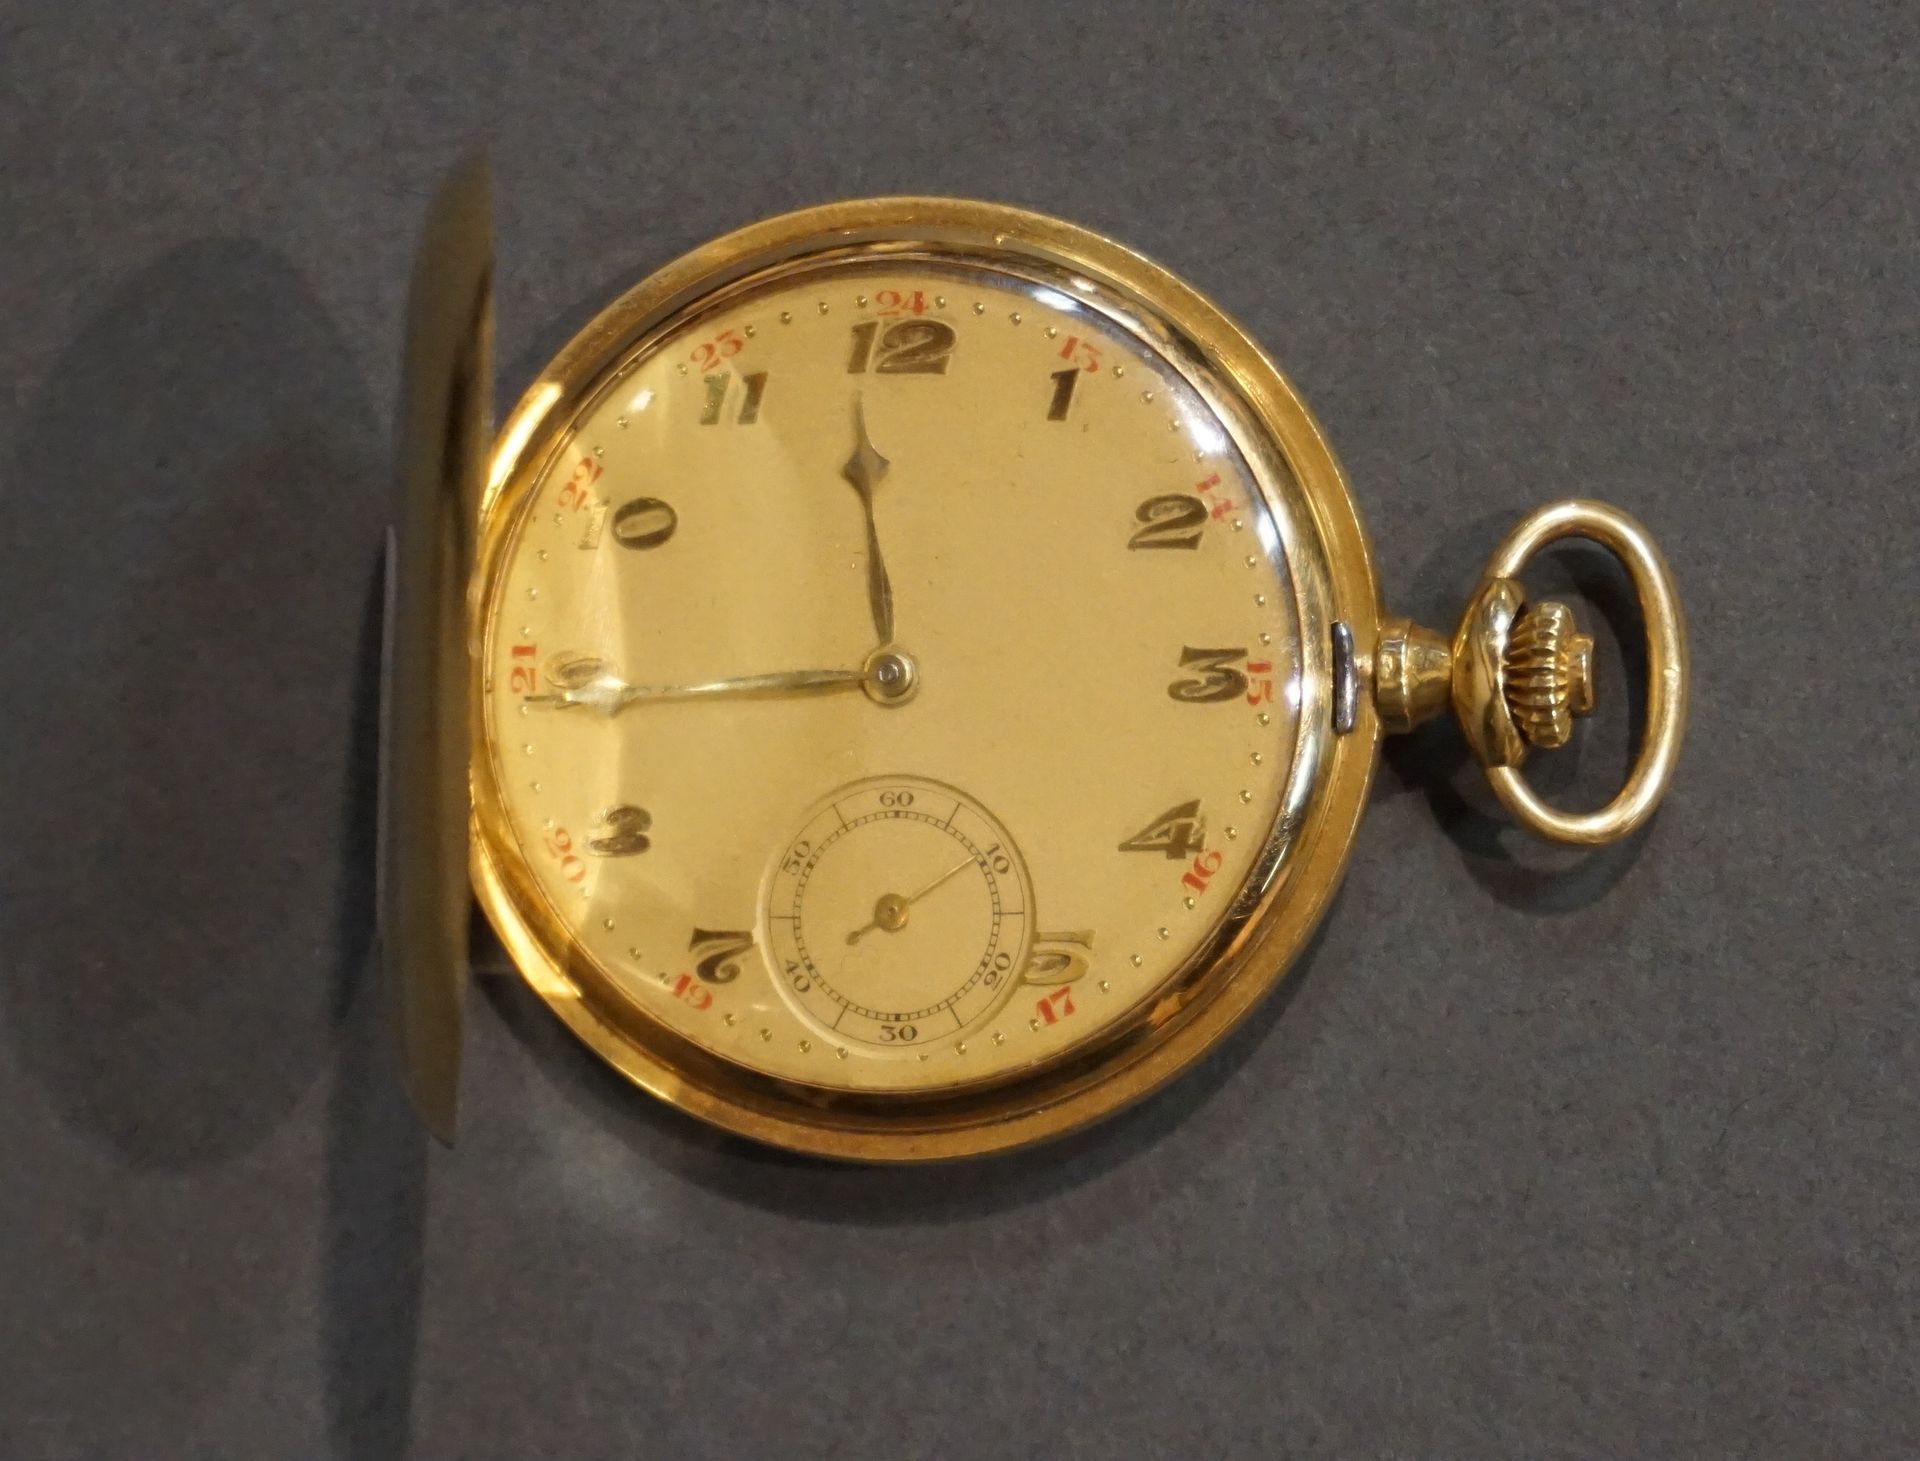 Montre Reloj de bolsillo savonette de oro (peso bruto: 67g)